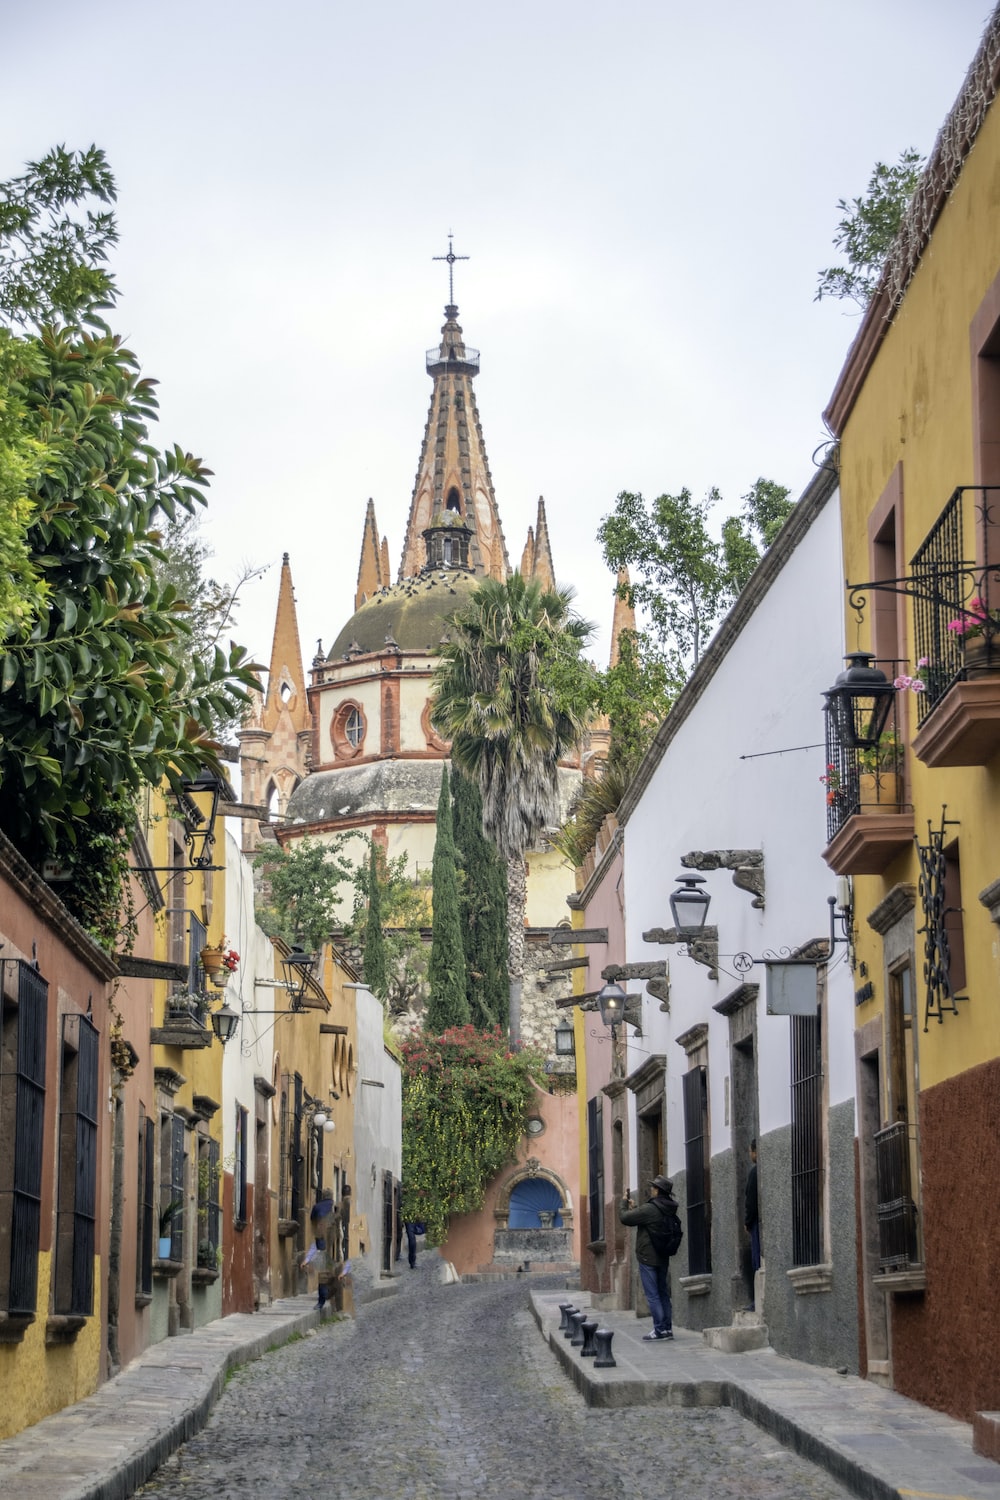 San Miguel De Allende Picture. Download Free Image